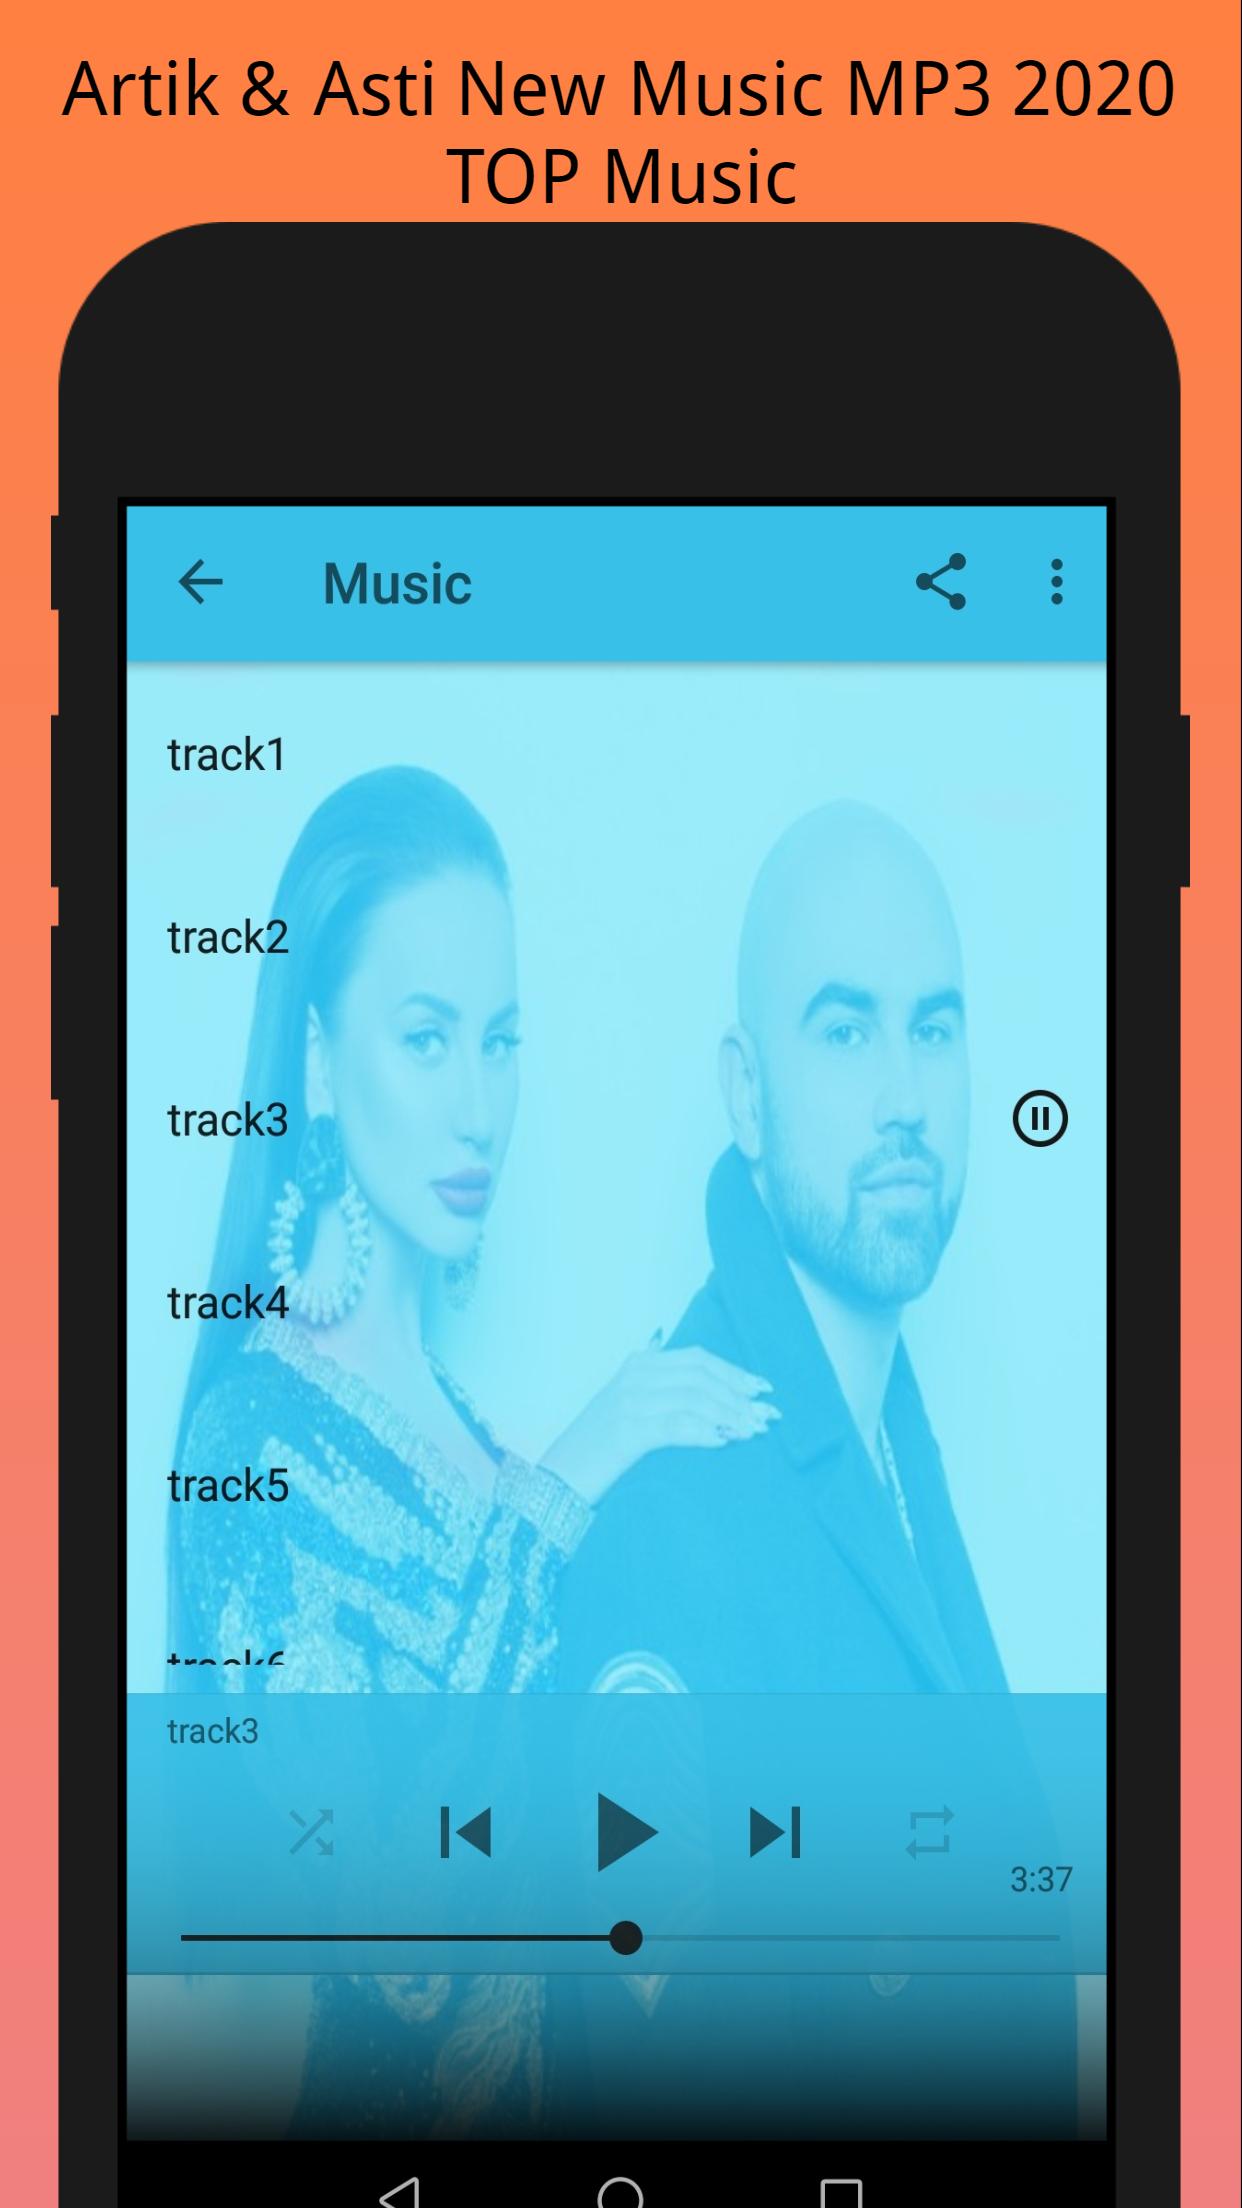 Artikk & Asti New songs MP3 2020 for Android - APK Download